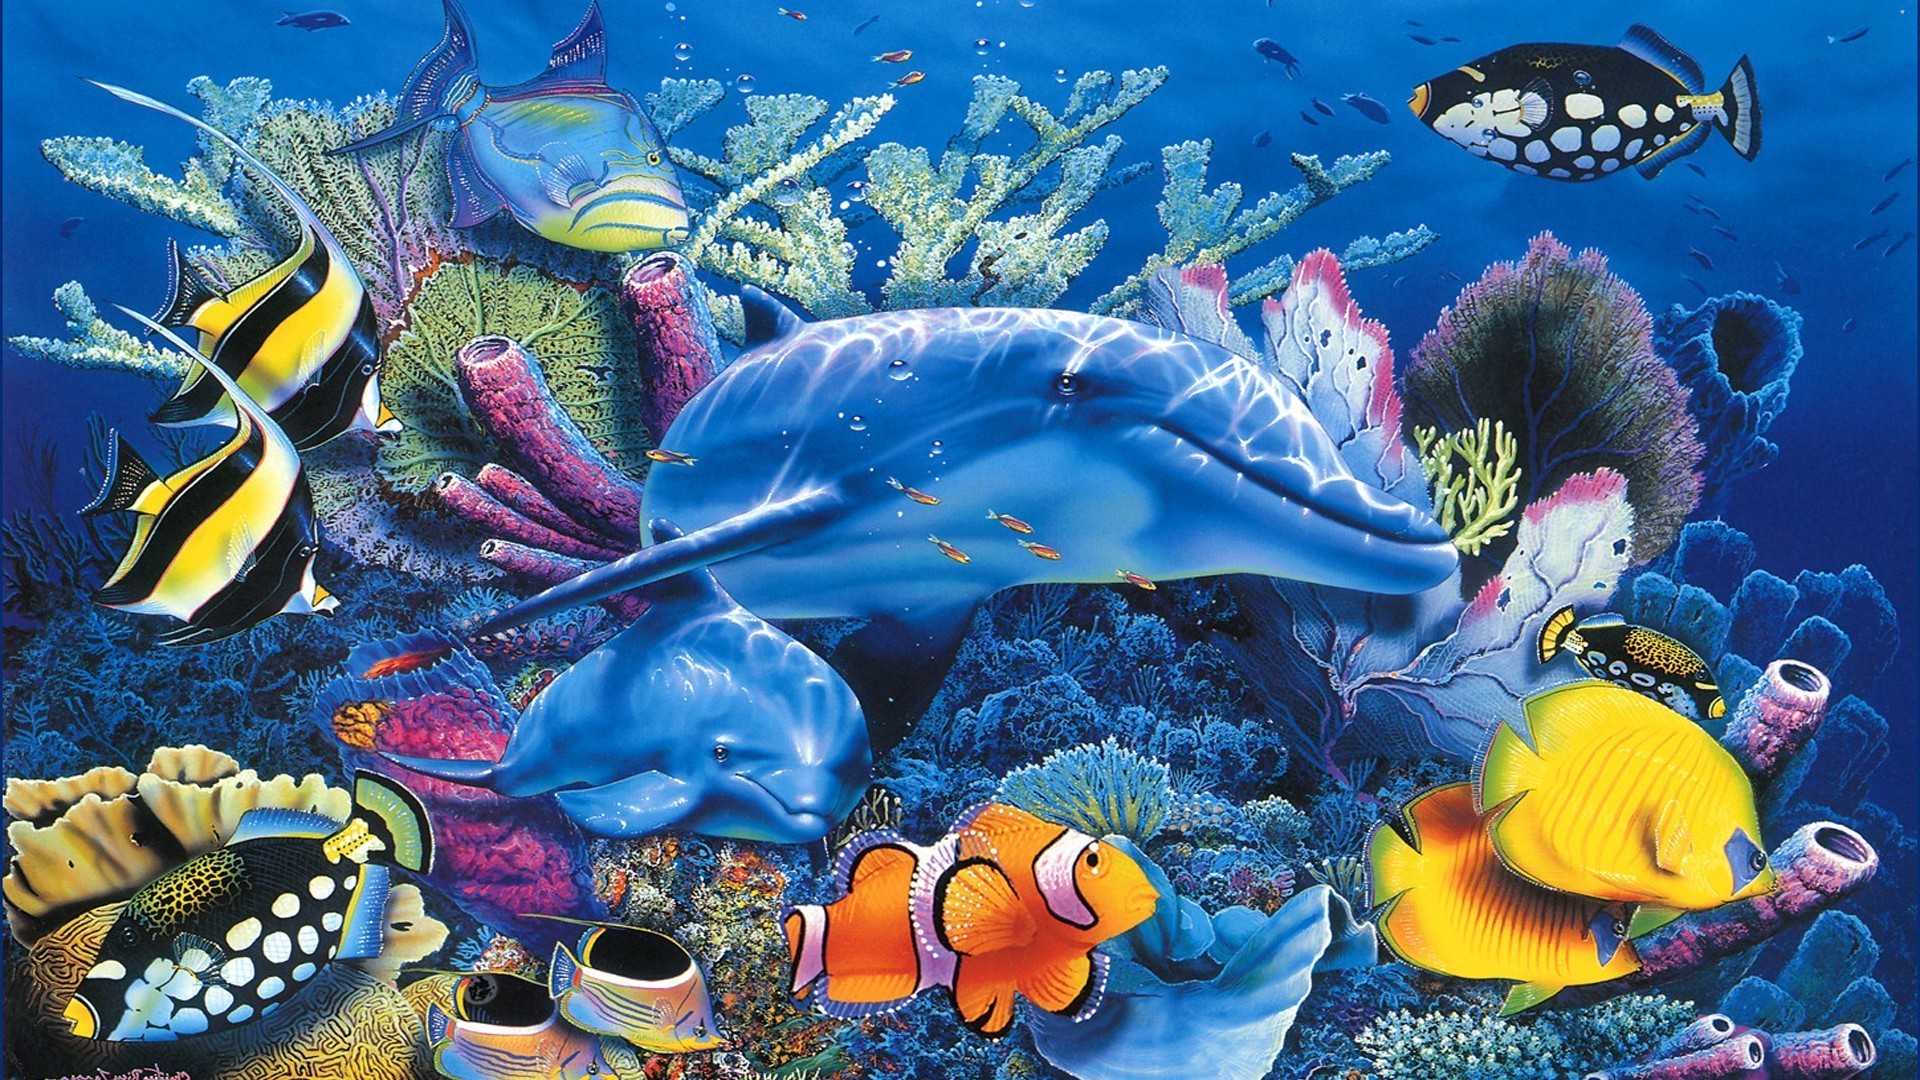 animals underwater fish coral reef ocean aquarium marine diving tropical sea water invertebrate snorkeling swimming aquatic scuba color